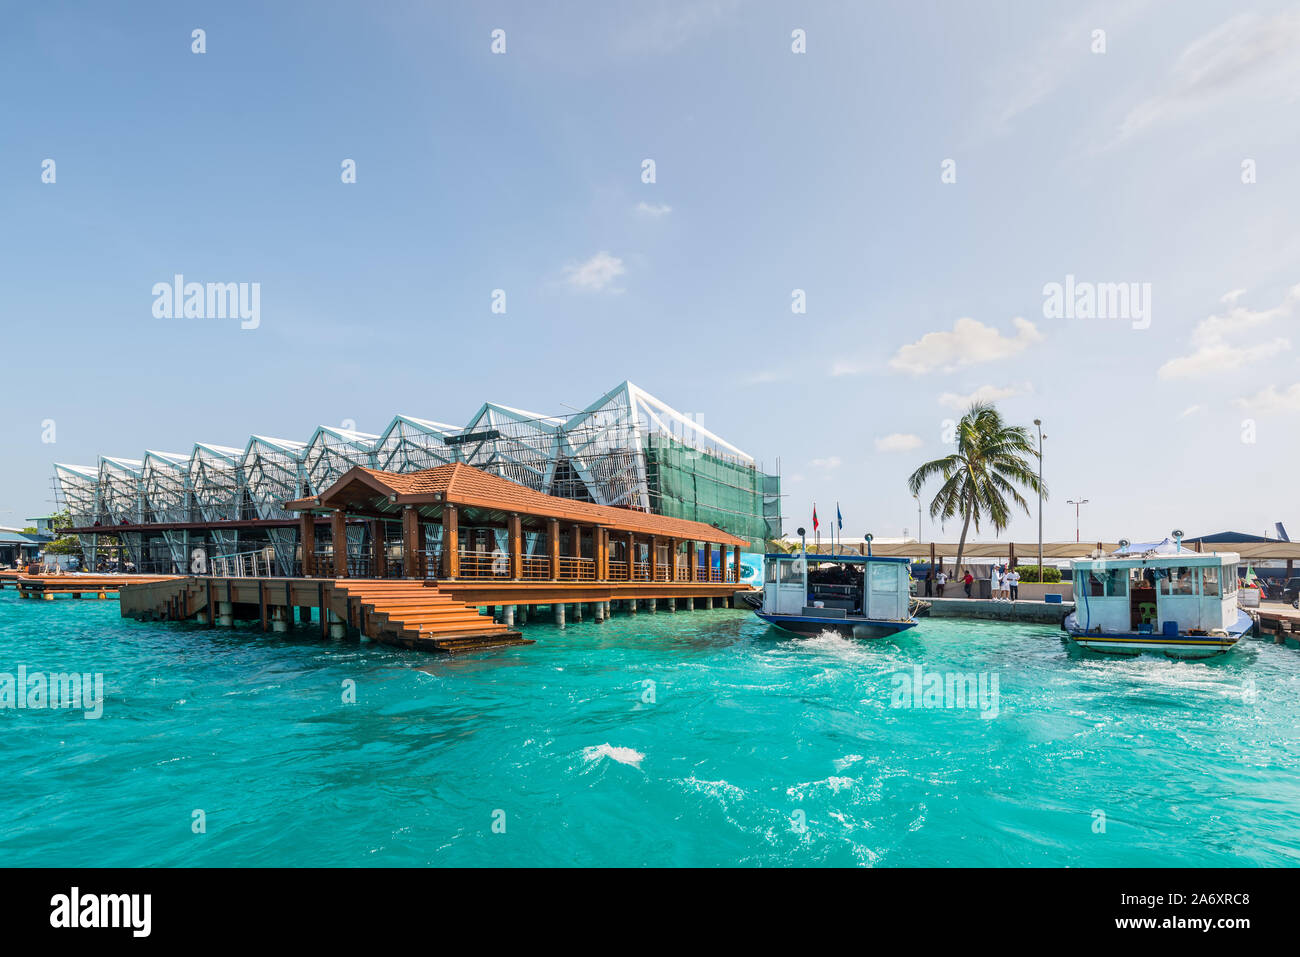 Hulhule Island, Maldives - November 18, 2017: Maritime station and pier at the Ibrahim Nasir International Airport, Maldives, Indian Ocean. Stock Photo